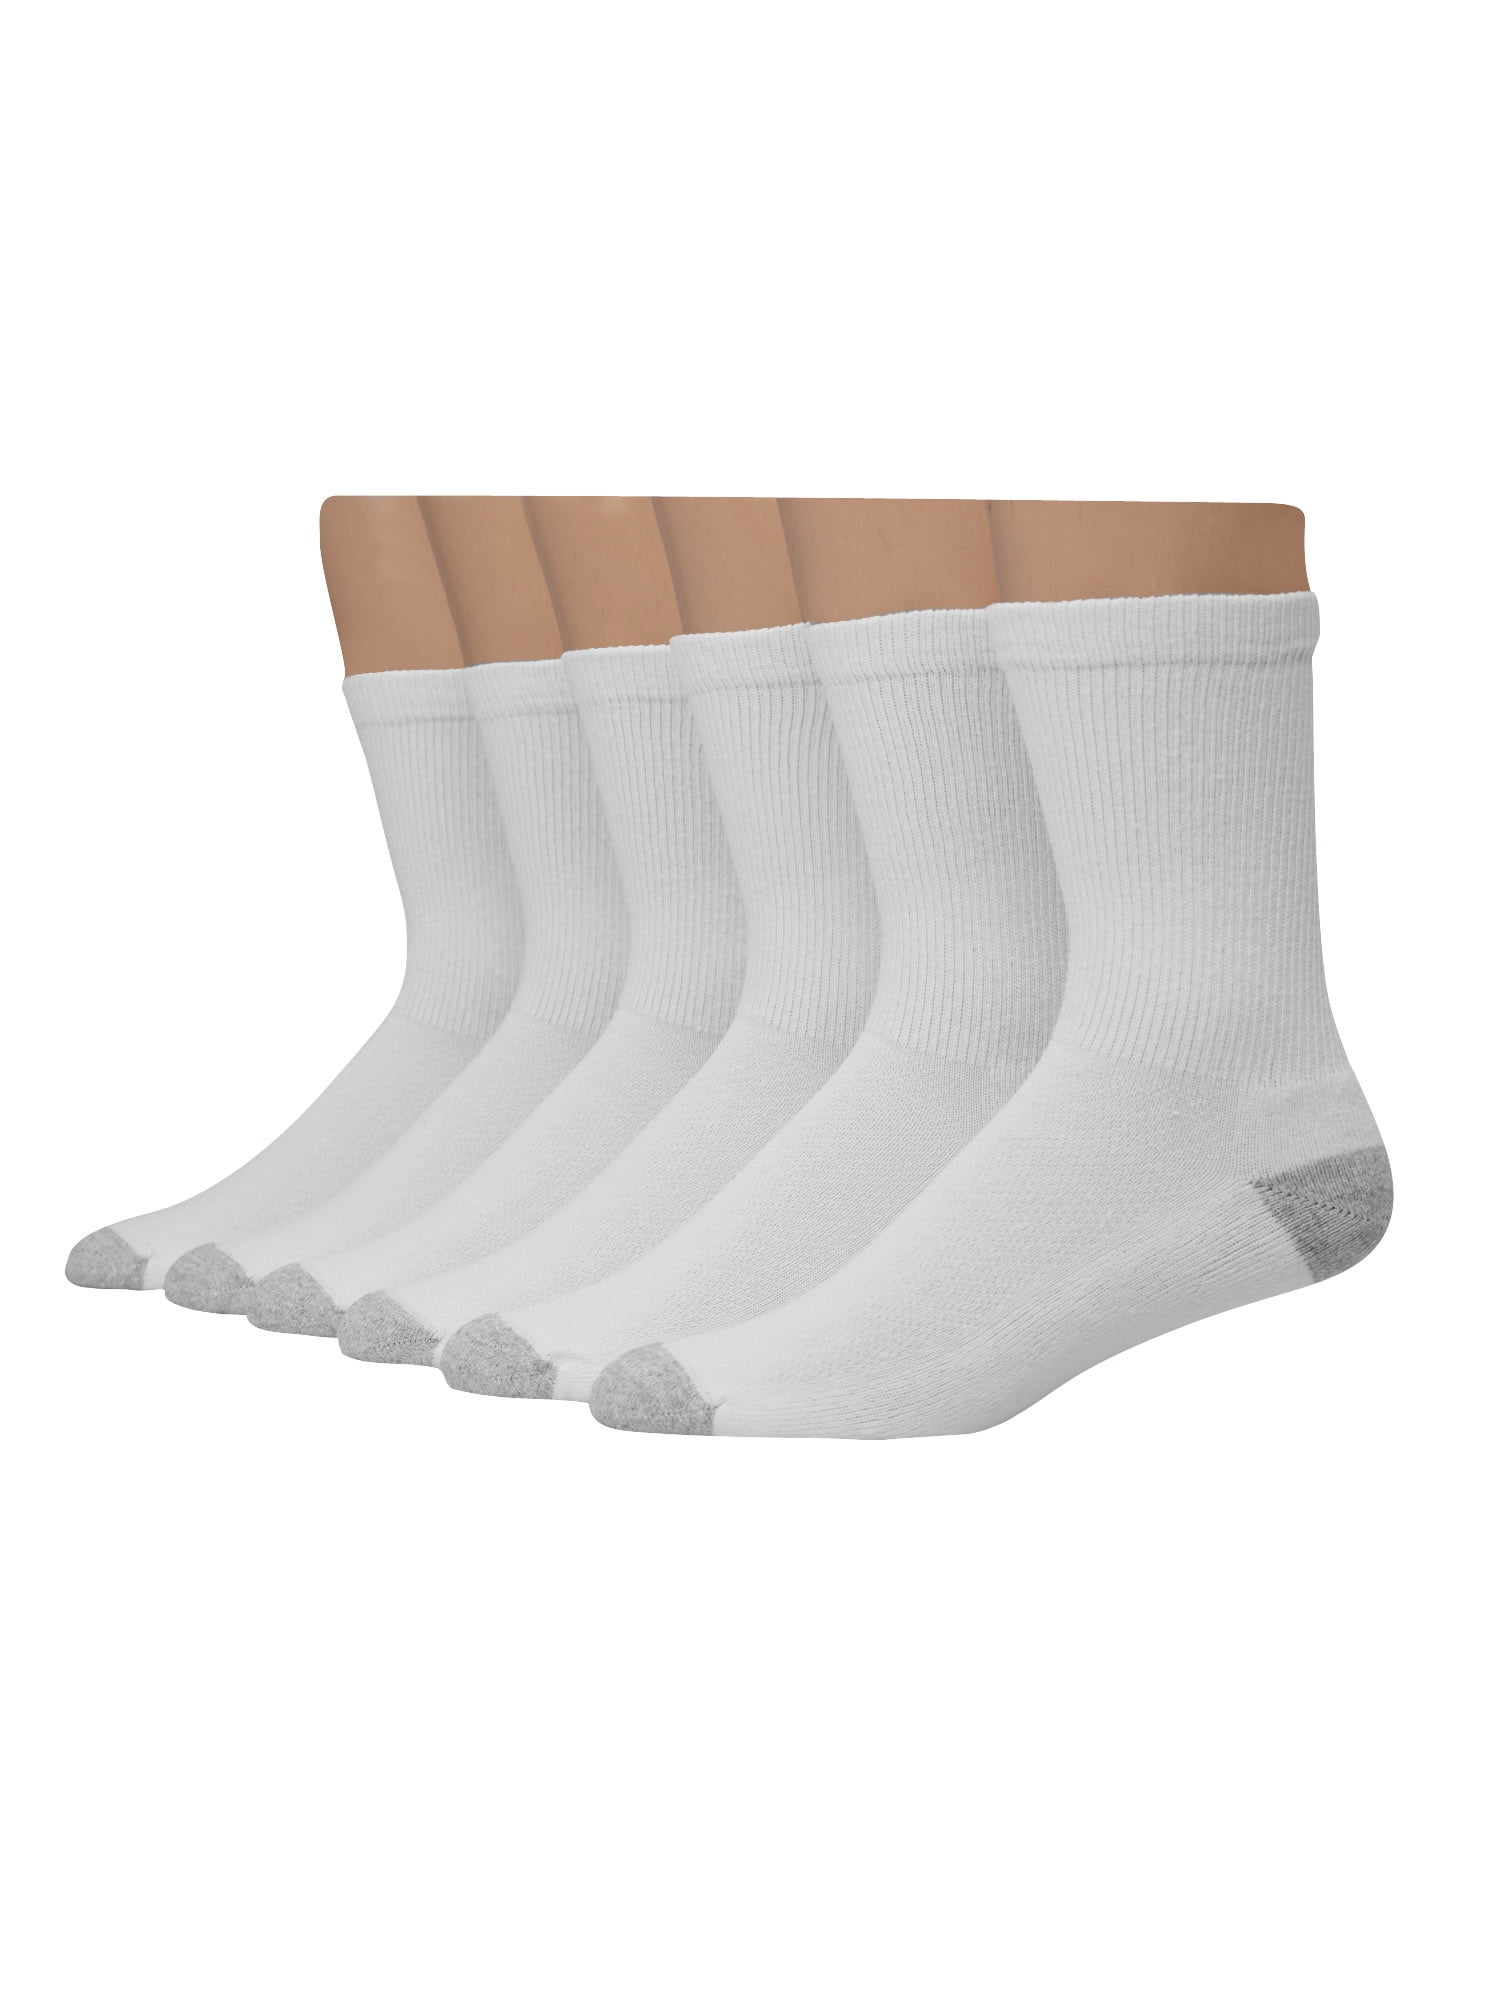 Details about   Hanes IC36 Men's FreshIQ ComfortBlend Sport Cut Socks 6-Pack 